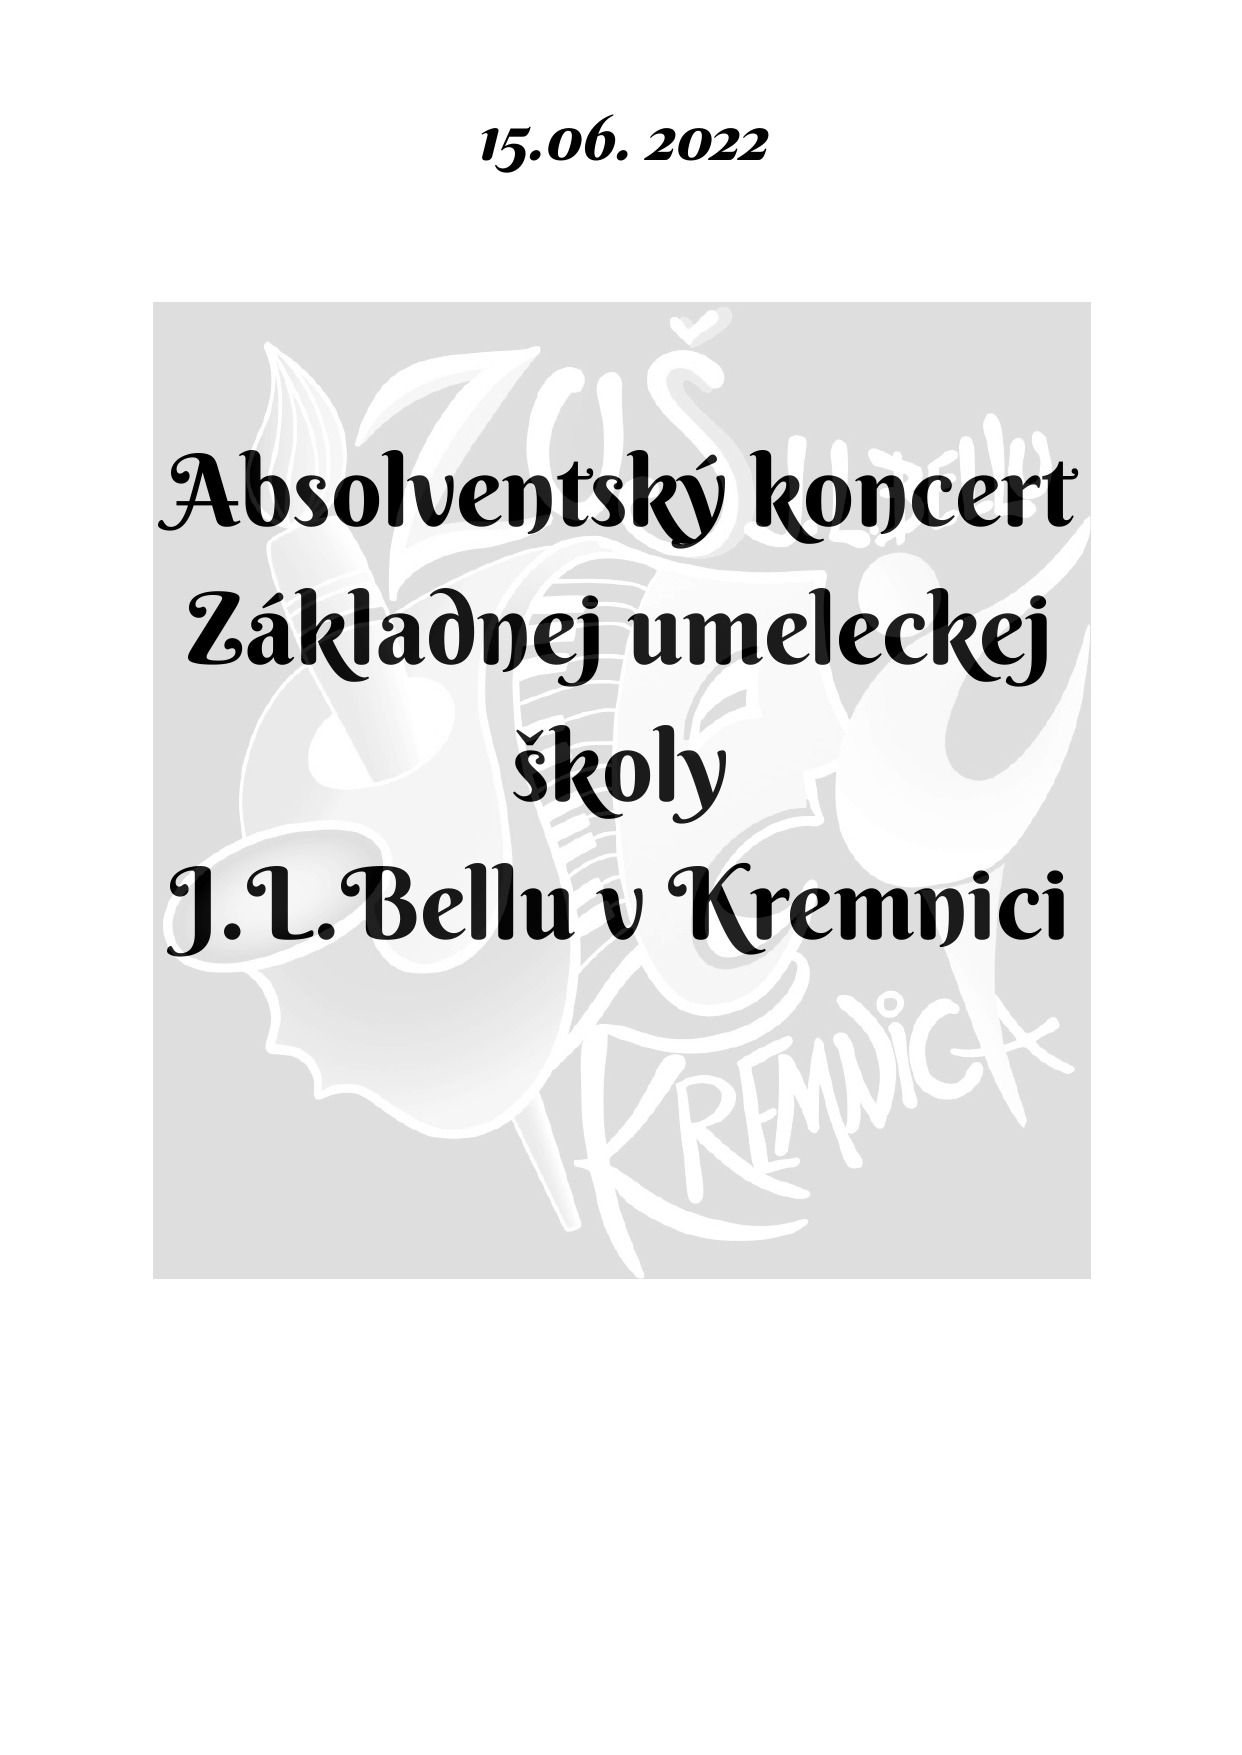 Online absolventský koncert hudobného odboru 15.06. o 17:00 - Obrázok 1